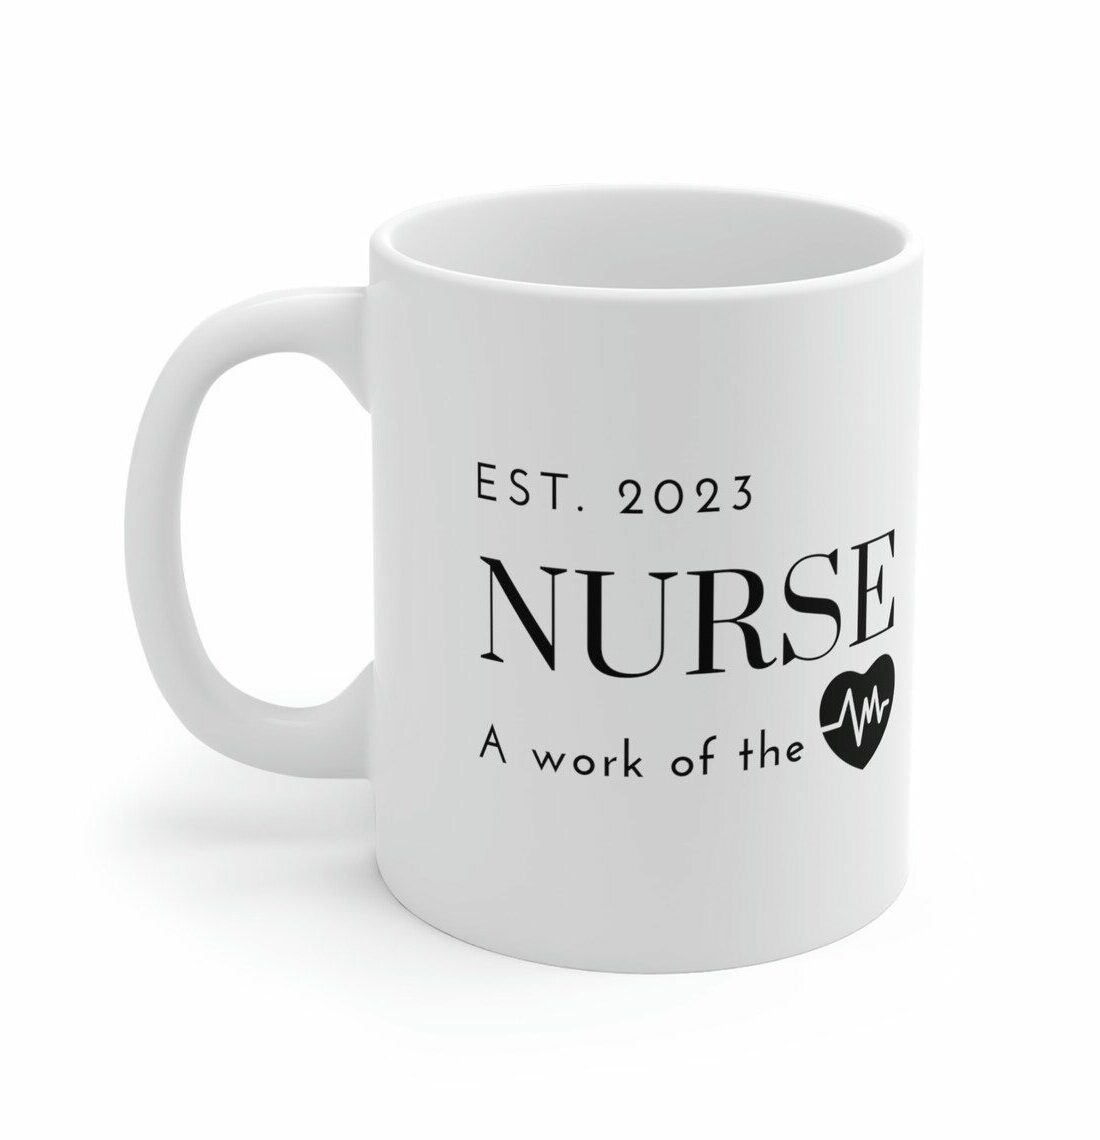 2023 nurse graduation| mug gift for daughter or sister - 15 oz